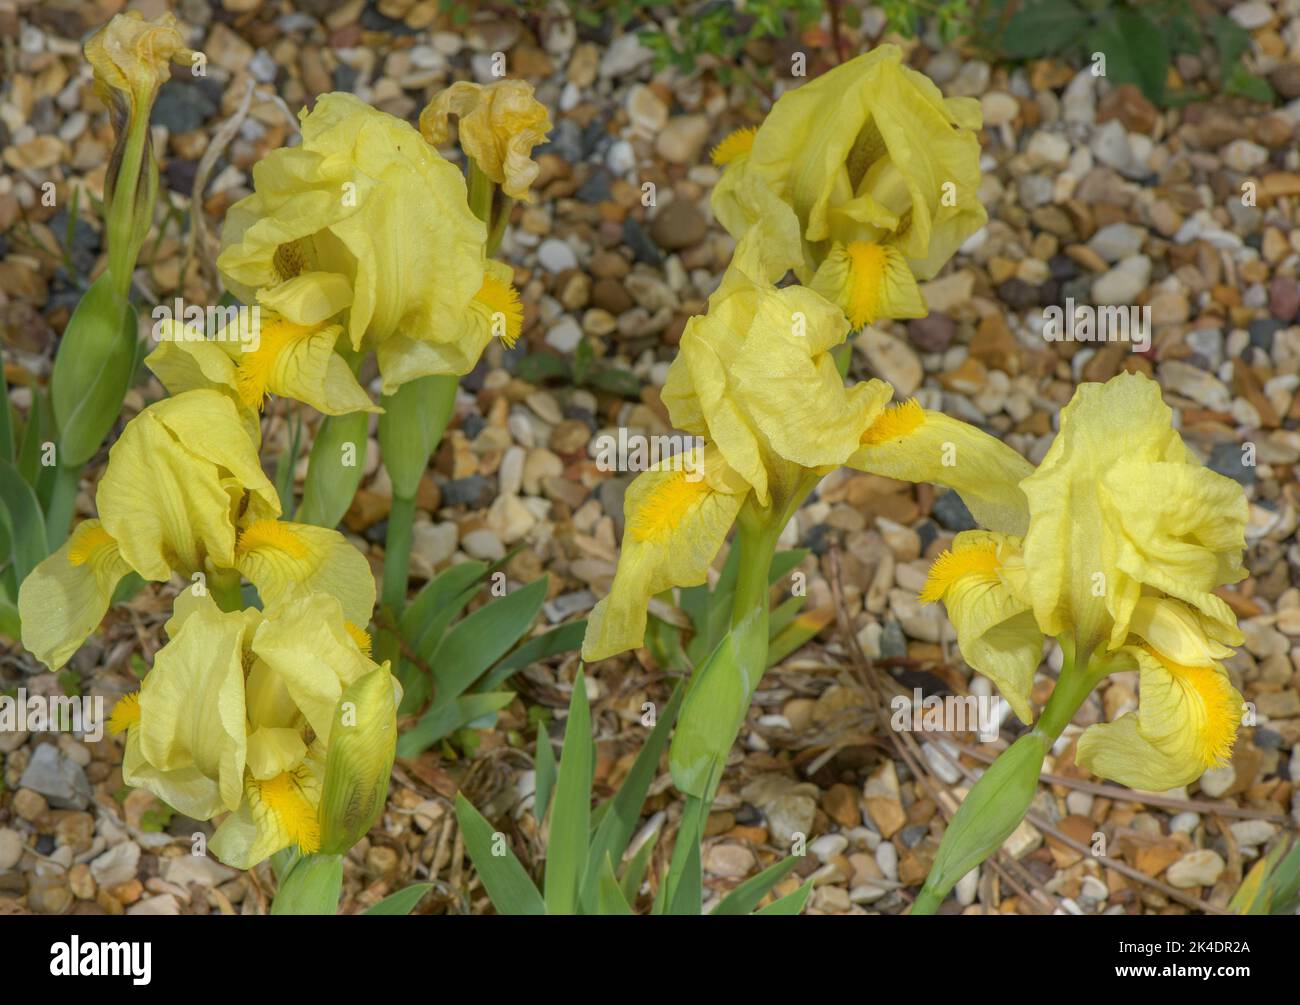 Rock Iris, Iris reichenbachii, in flower in its yellowform. Balkans. Stock Photo